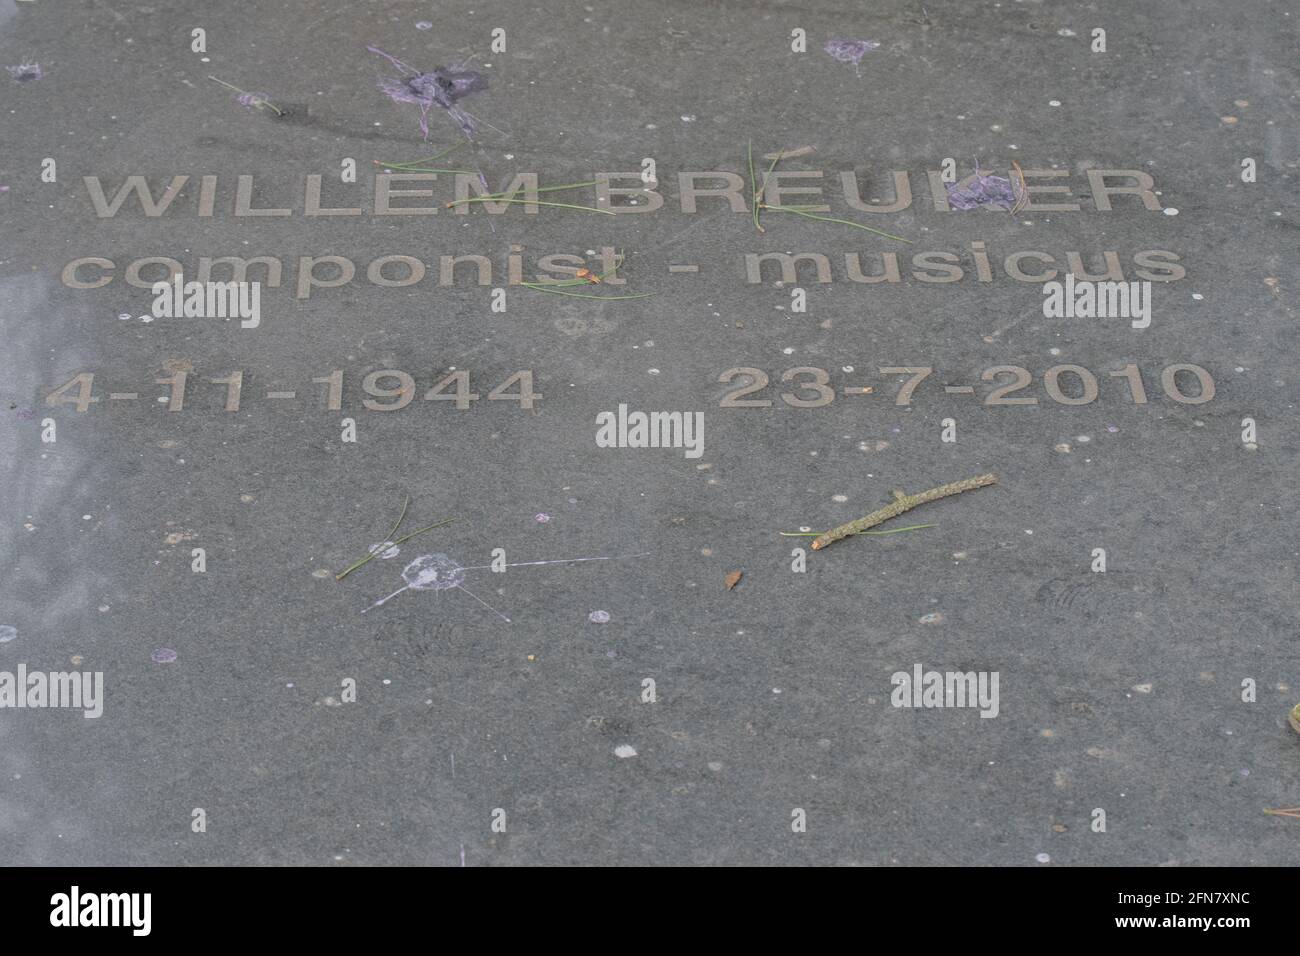 Grave Willem Breuker At Amsterdam The Netherlands 2-4-2020 Stock Photo